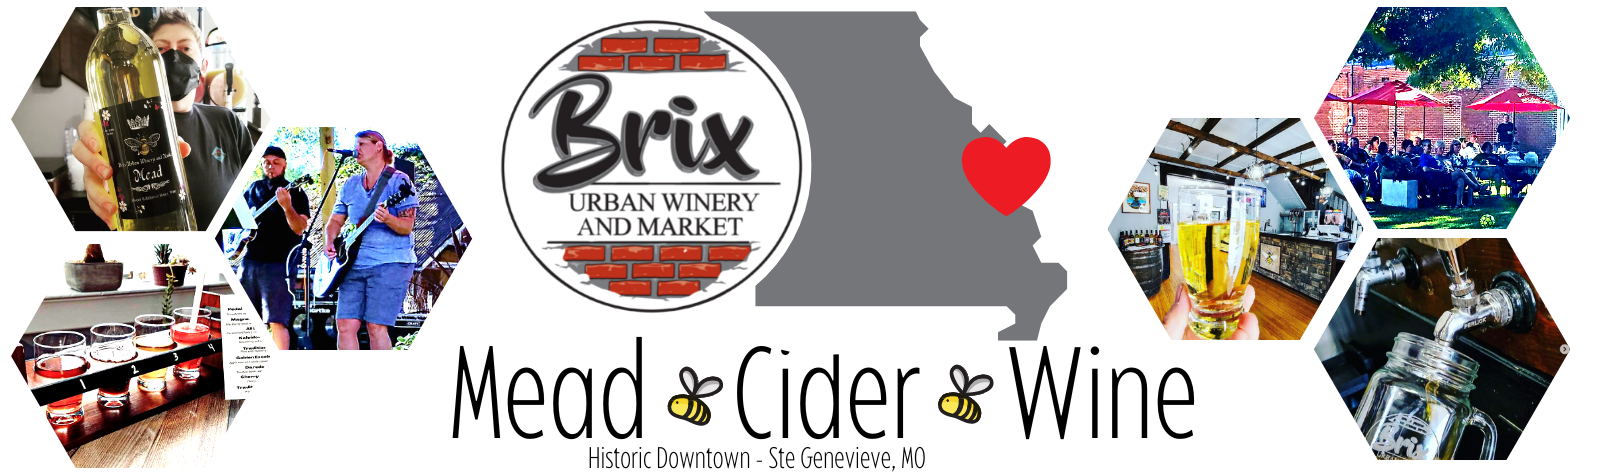 Brix Urban Winery and Market